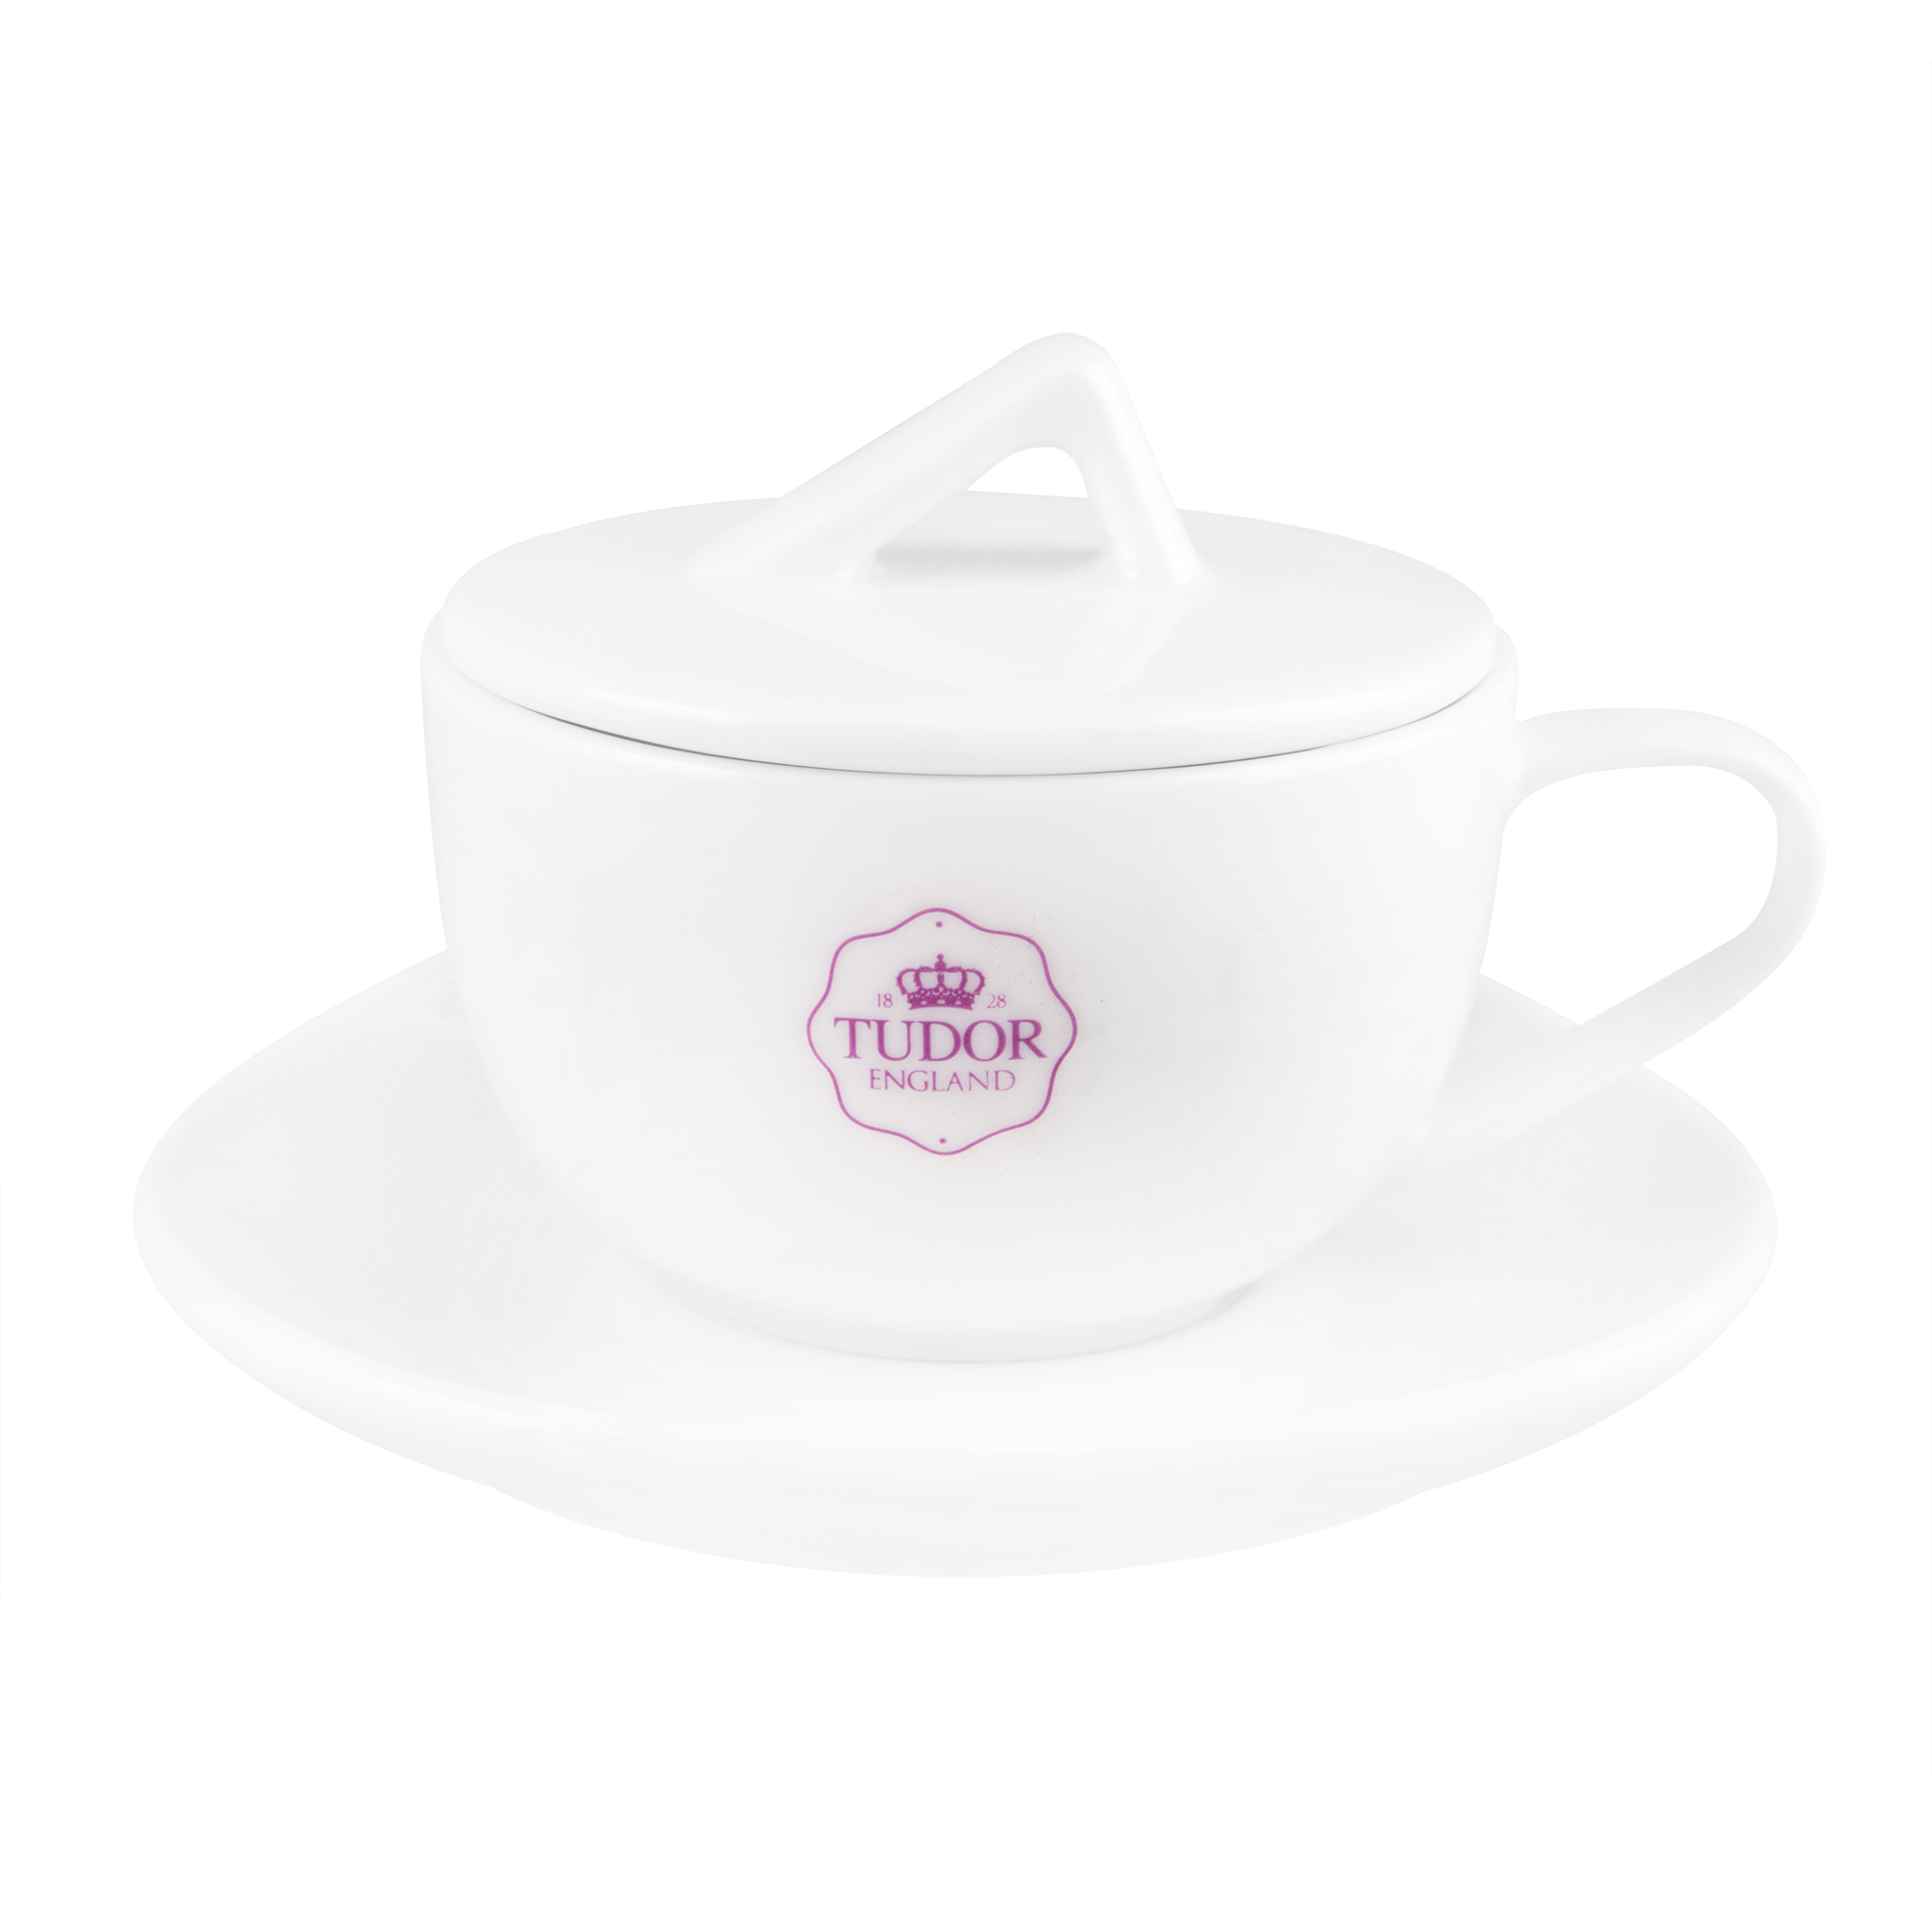 Пара кофейная чашка + блюдце 90 мл Tudor royal whitehall кофейная чашка 100 мл арт tu3111 tudor england